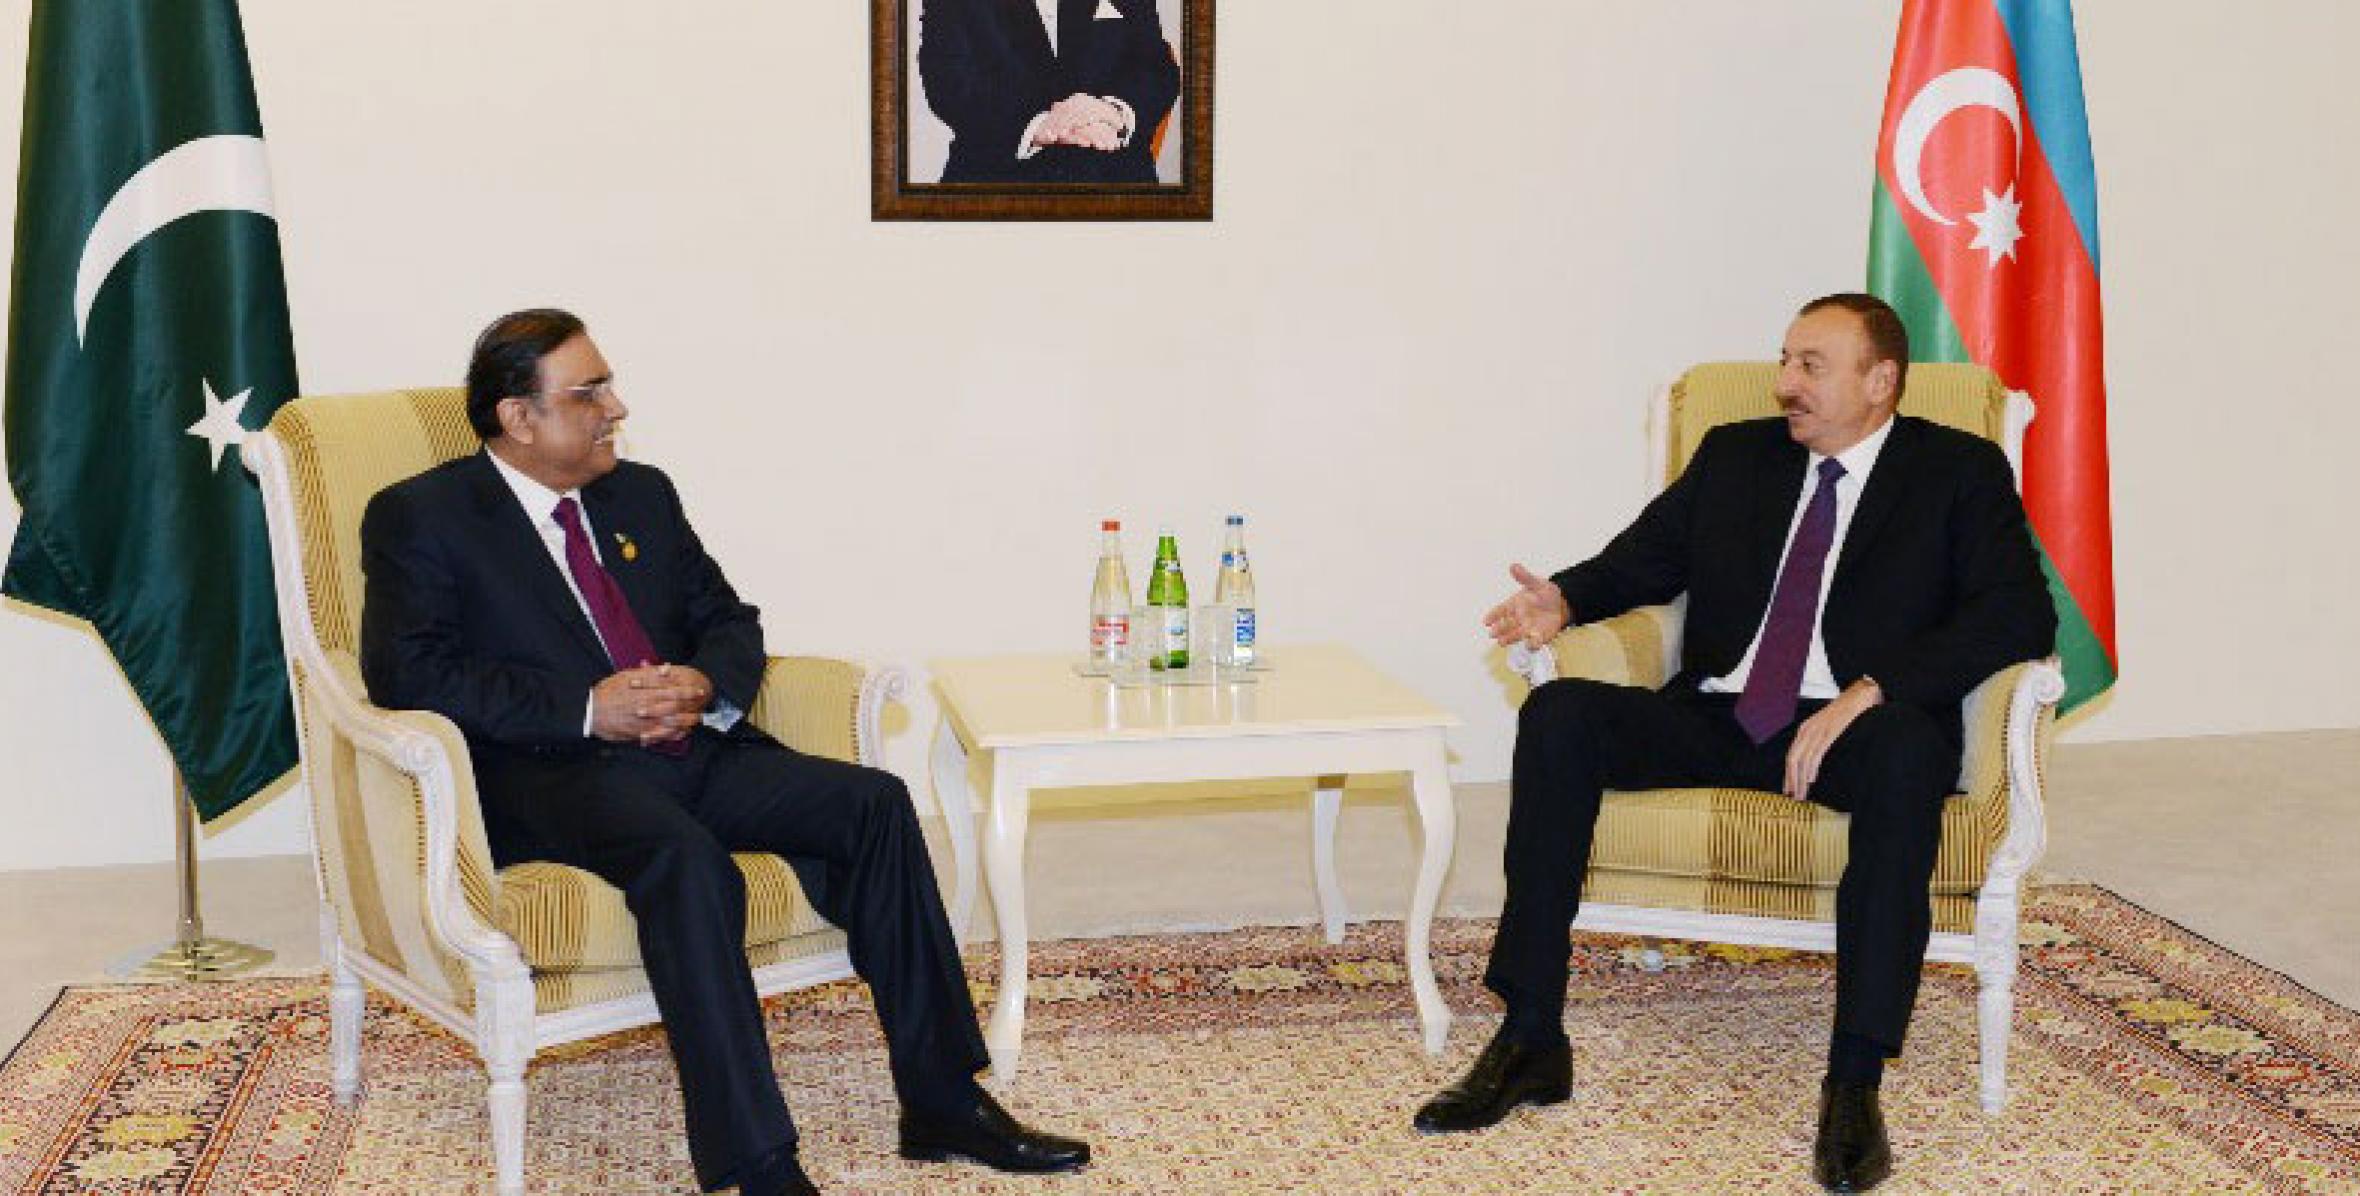 Ilham Aliyev met with President of Pakistan Asif Ali Zardari